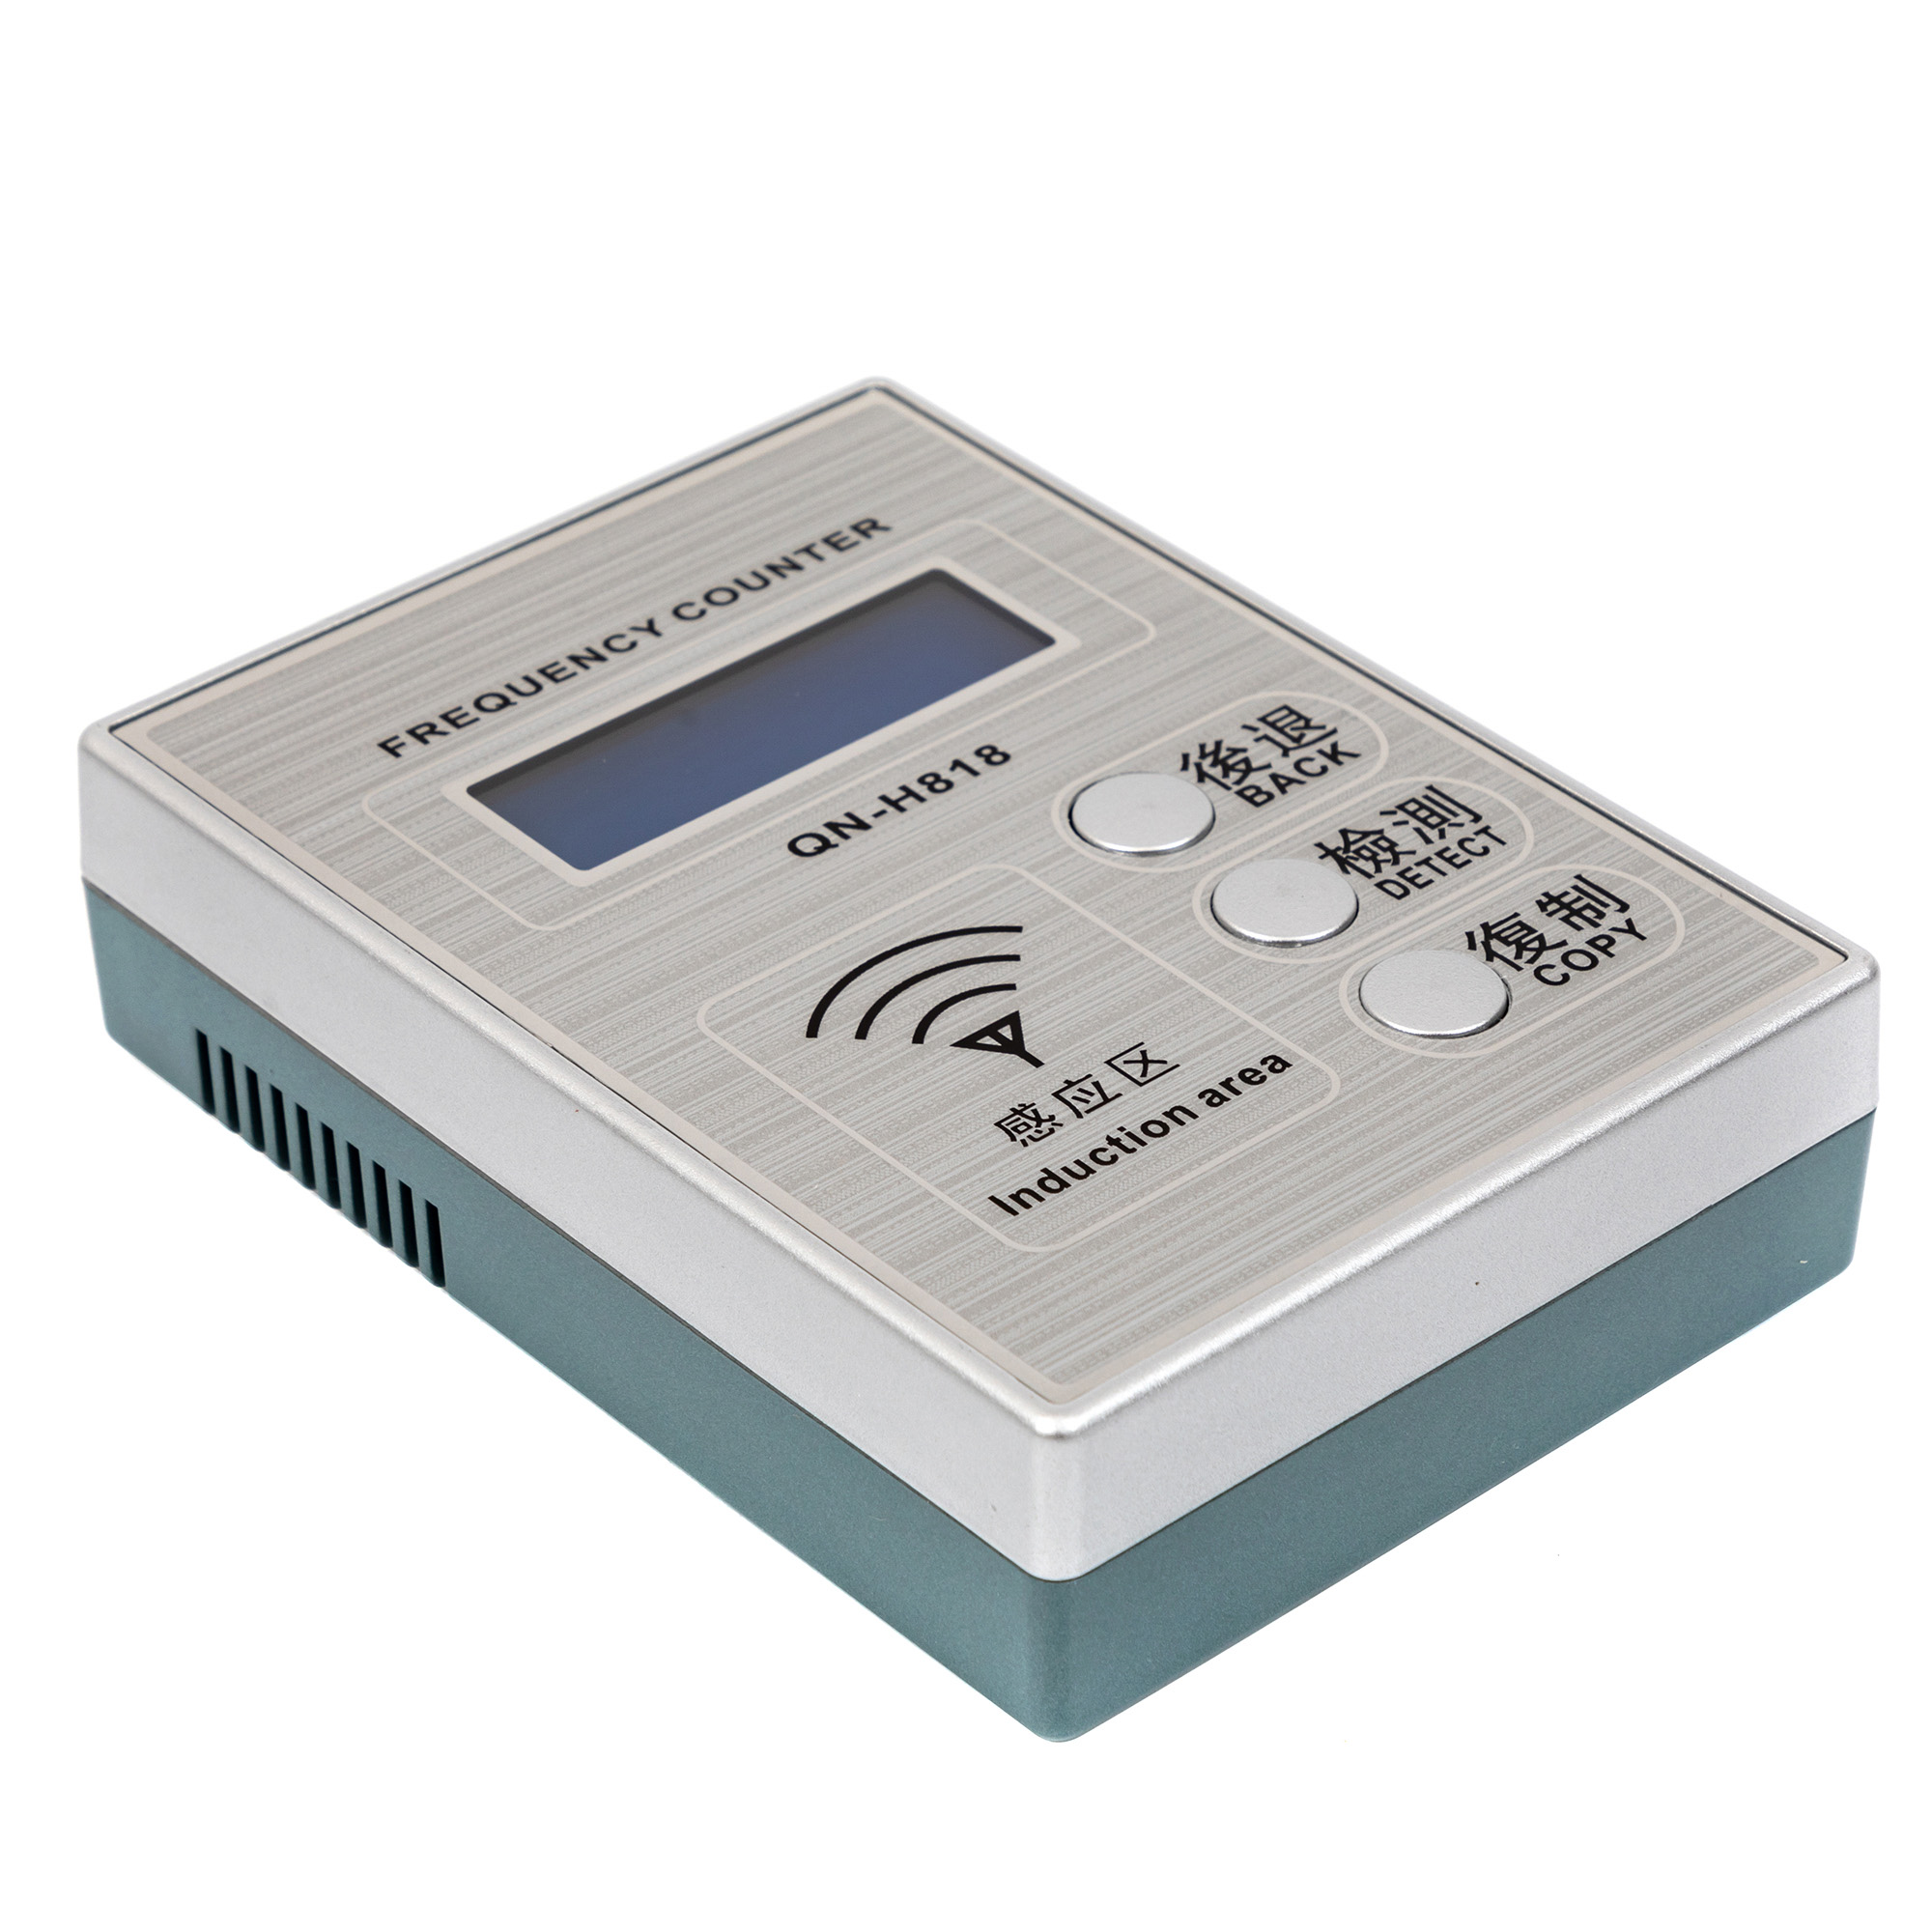 QN-H818 RF Control remoto Medidor de frecuencia inalámbrico Contador 200MHZ-1Ghz Detector Cimómetro